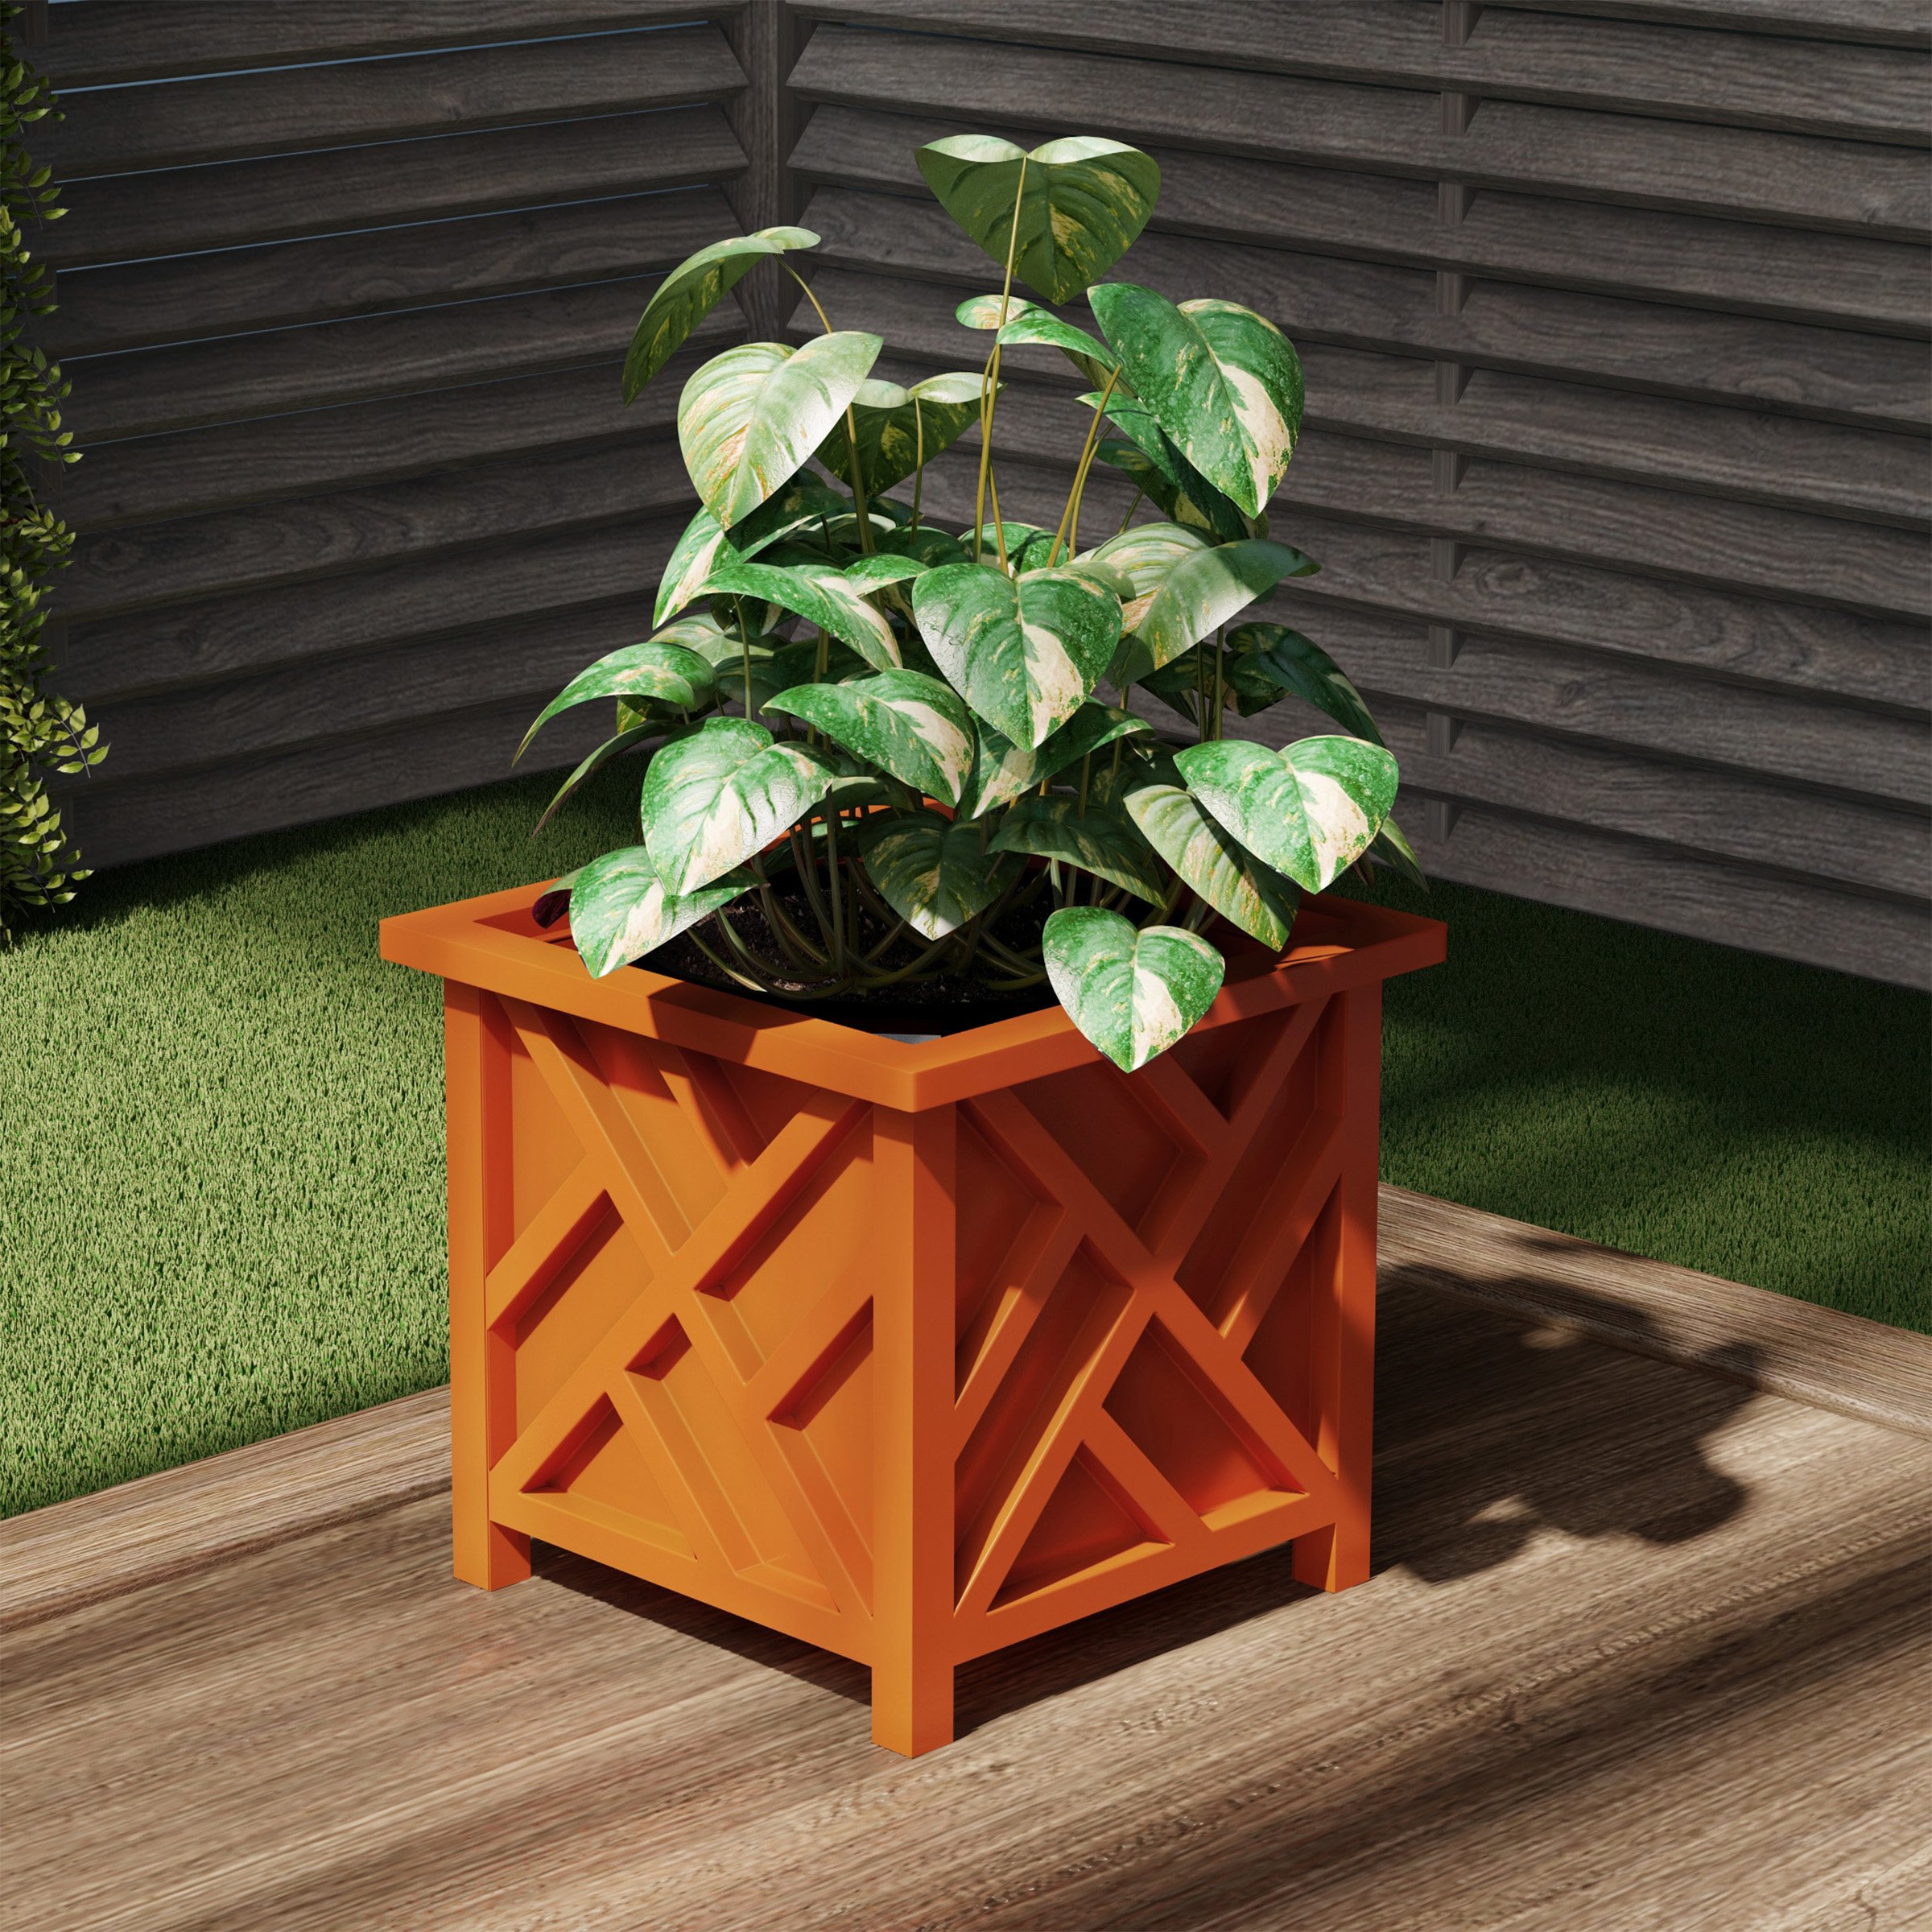 Square Planter Box- Black Lattice Container For Flowers & Plants Bottom Insert Holds Soil Outdoor Pot For Garden Patio - White